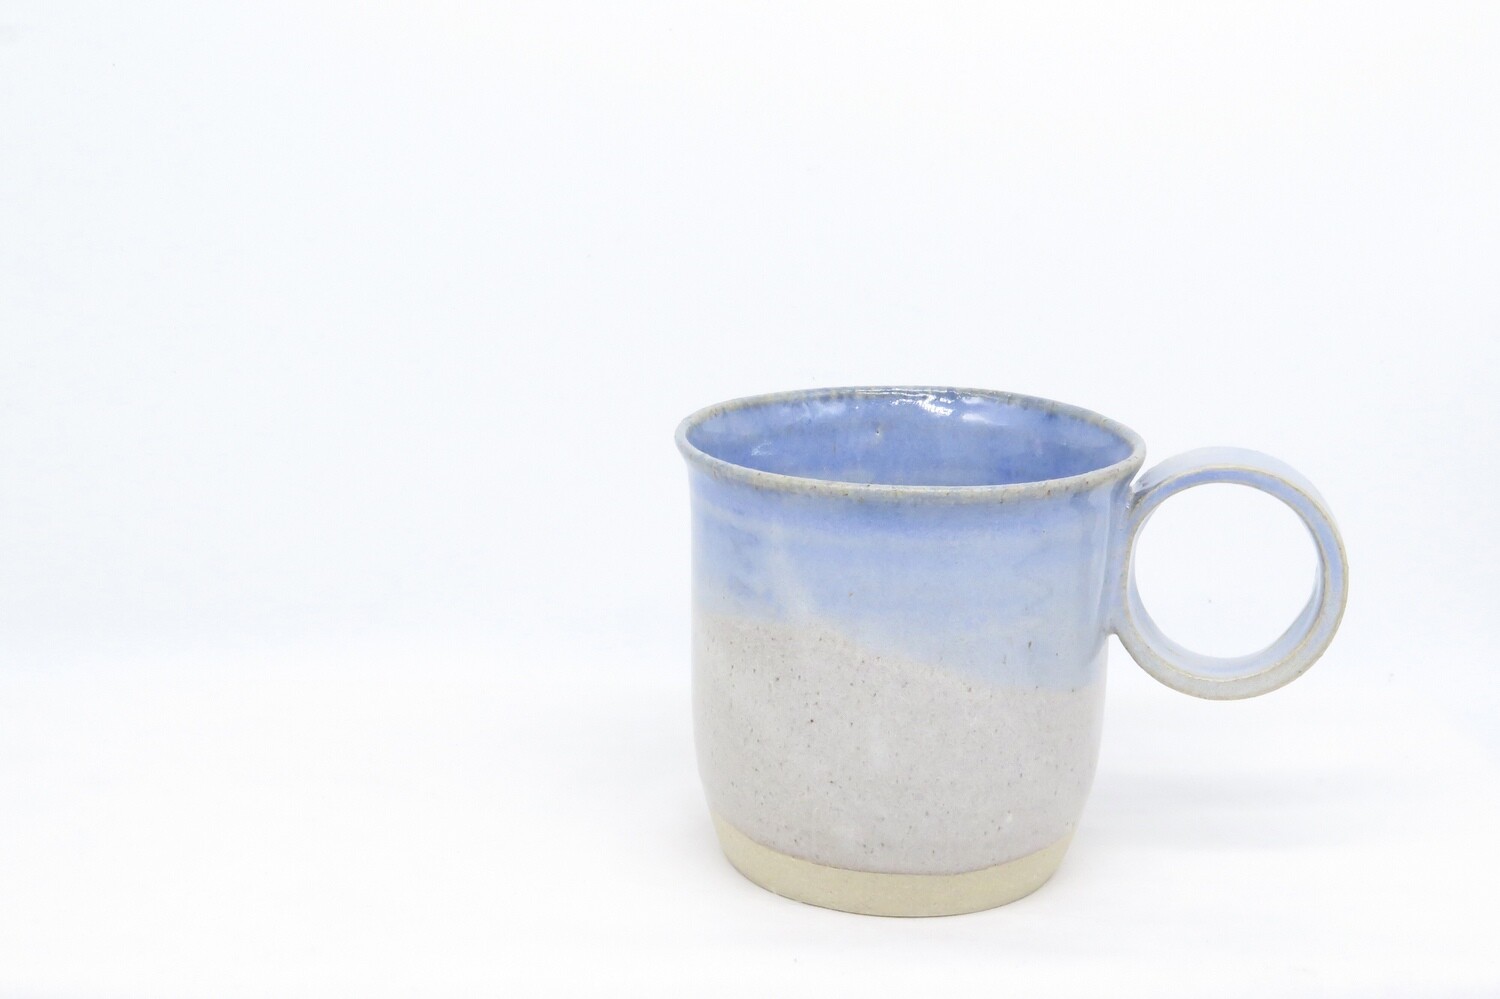 Mug - Sky blue and flecked white.